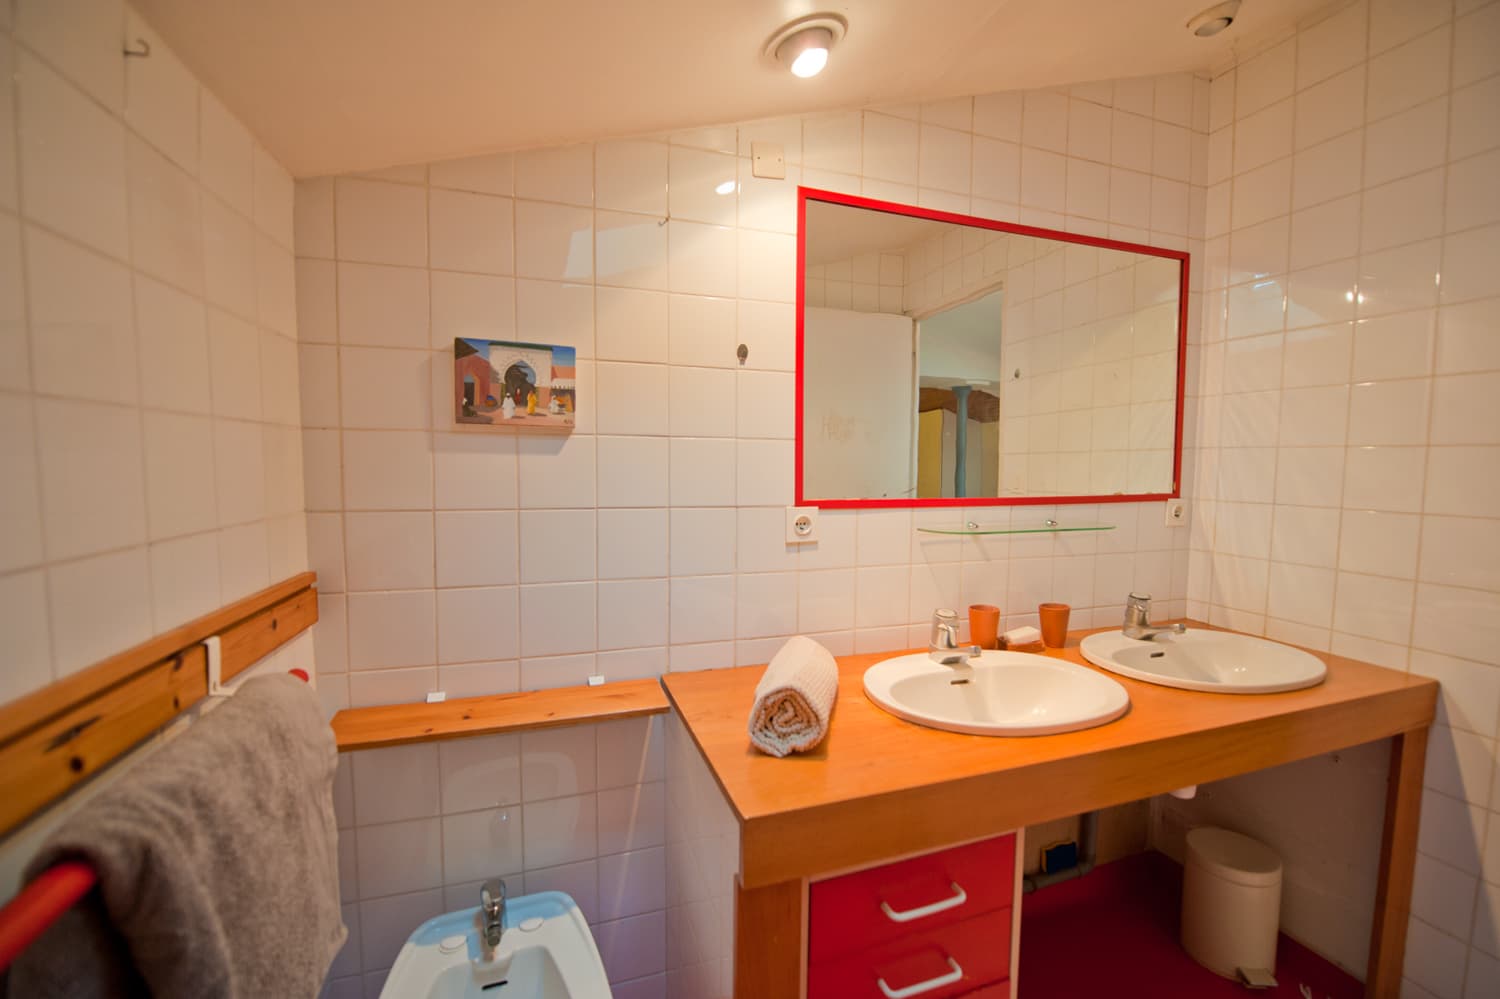 Bathroom in South West France rental home